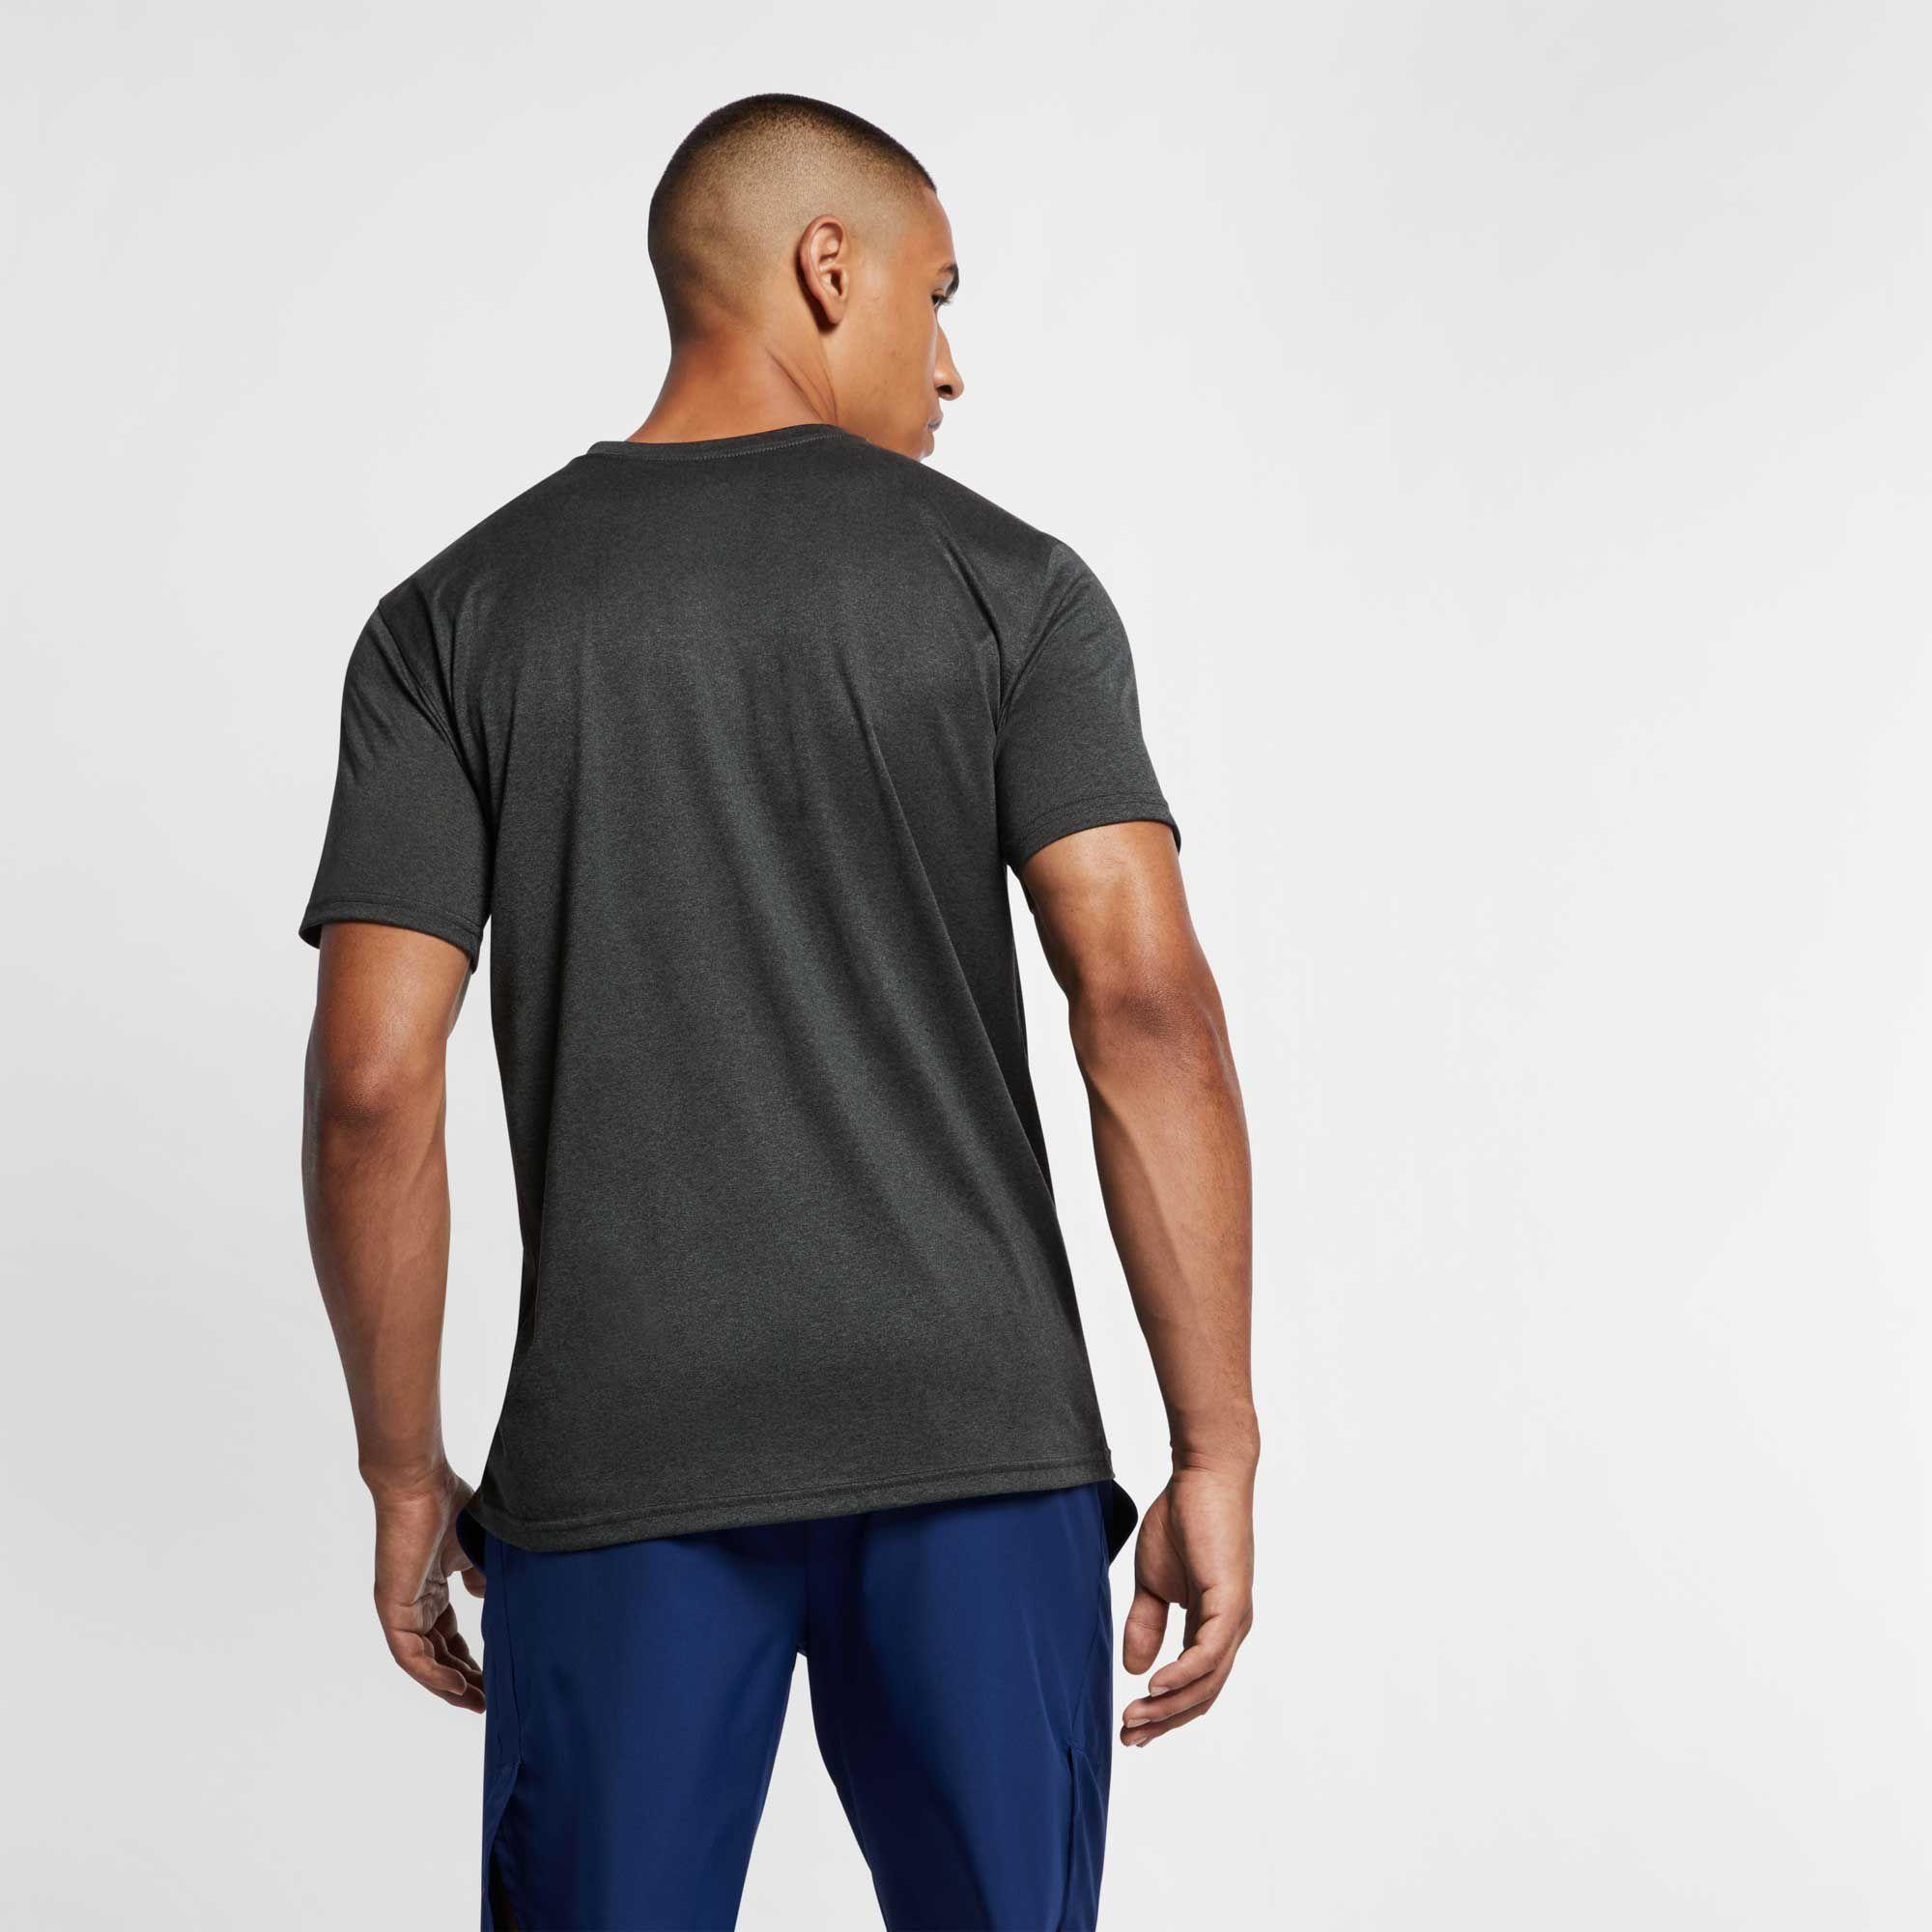 Nike Synthetic Legend 2.0 V-neck T-shirt in Black/Black/Anthracite ...